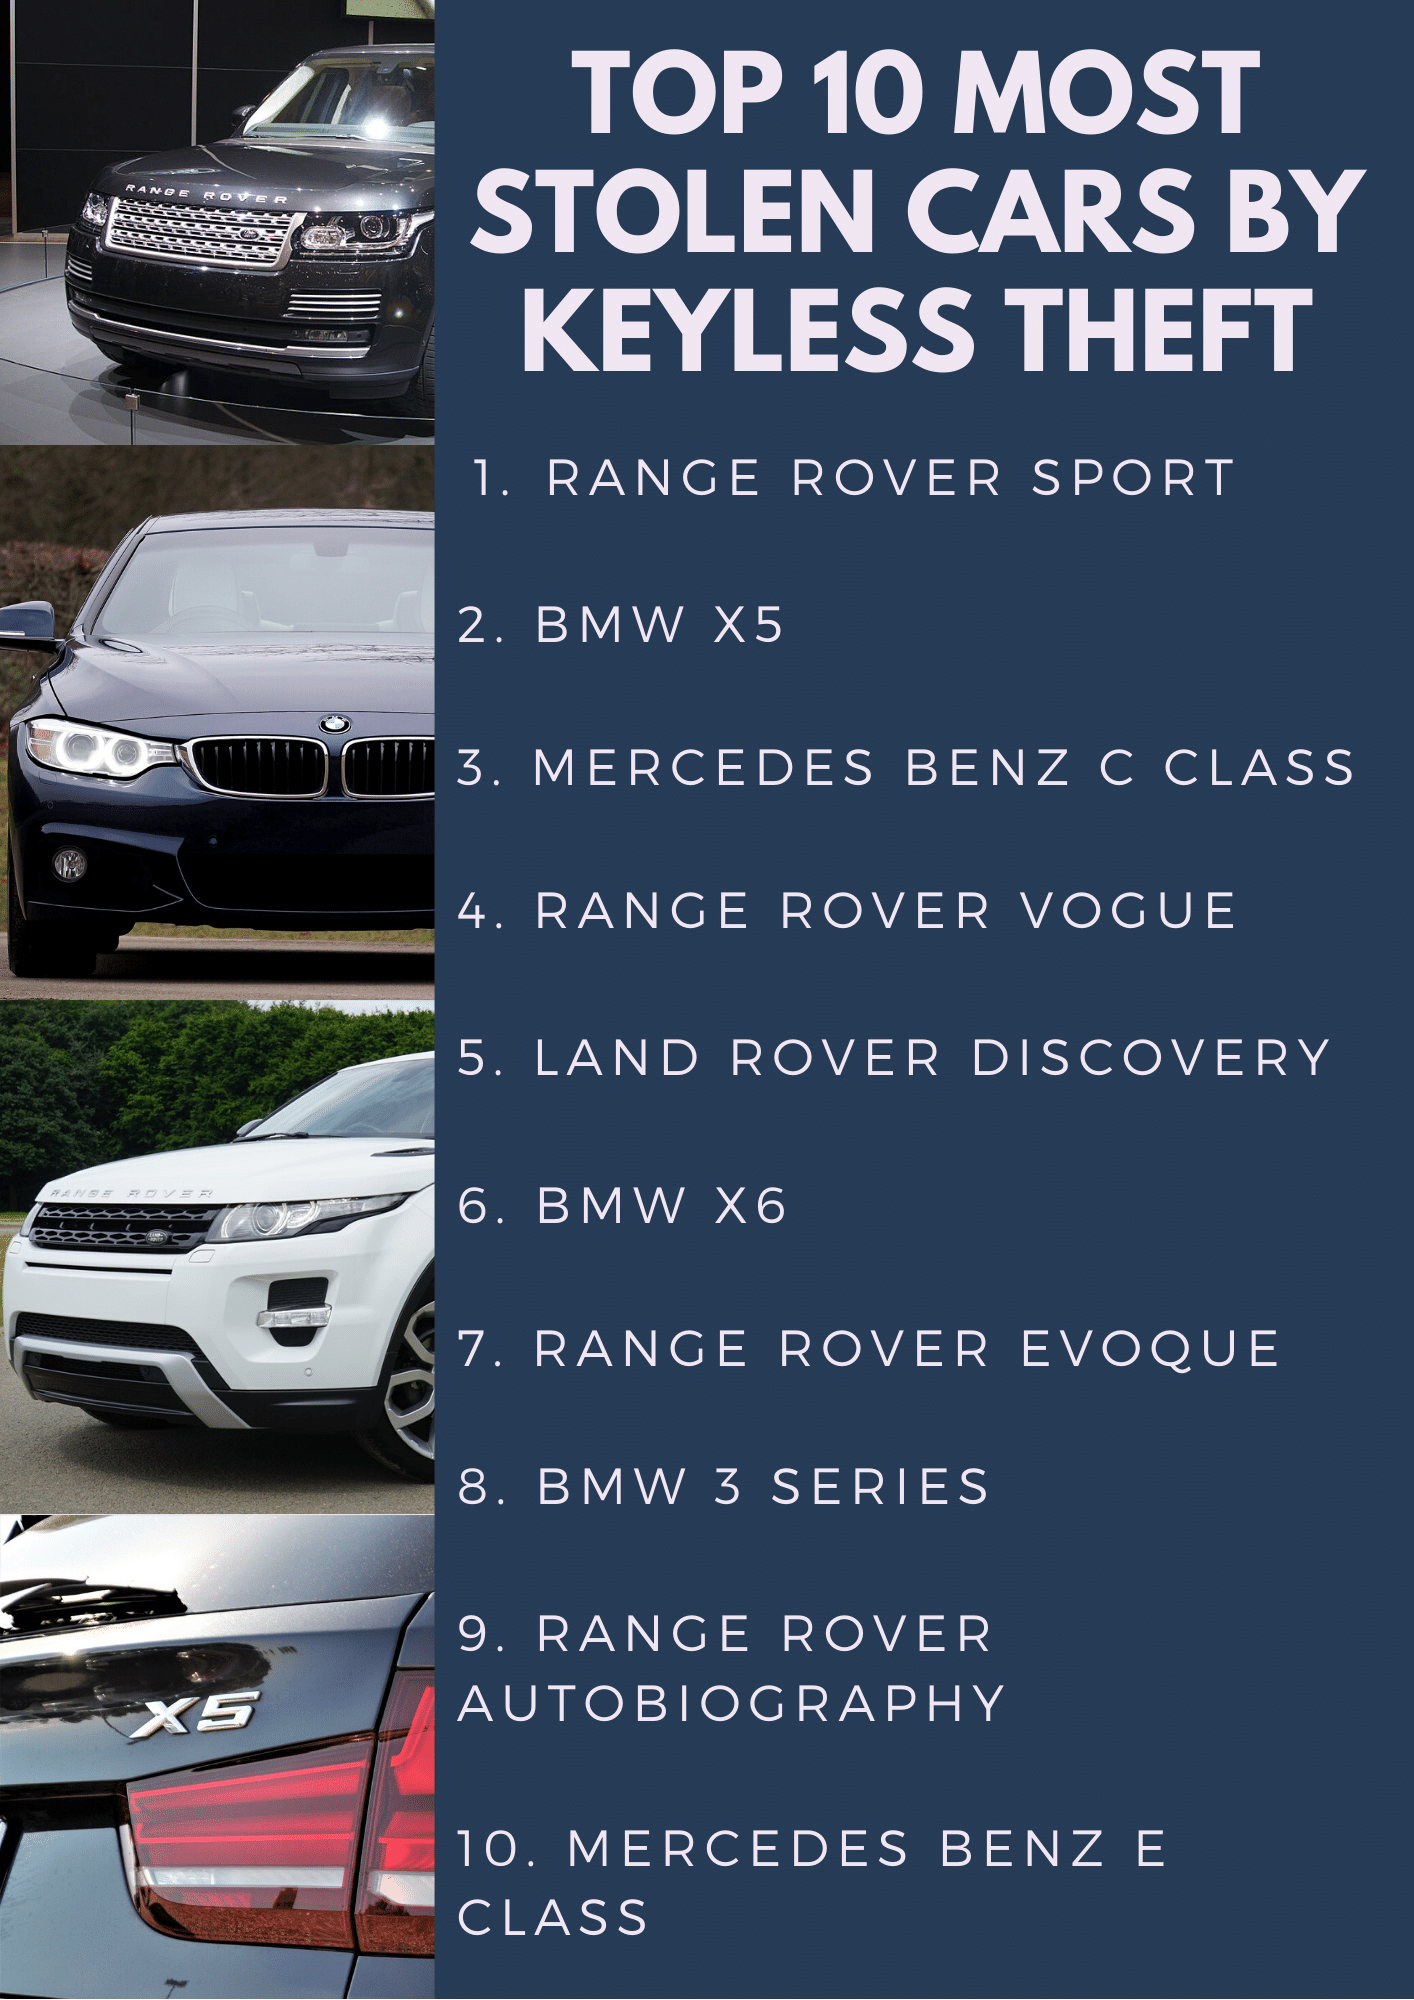 UK vehicle thefts on the rise